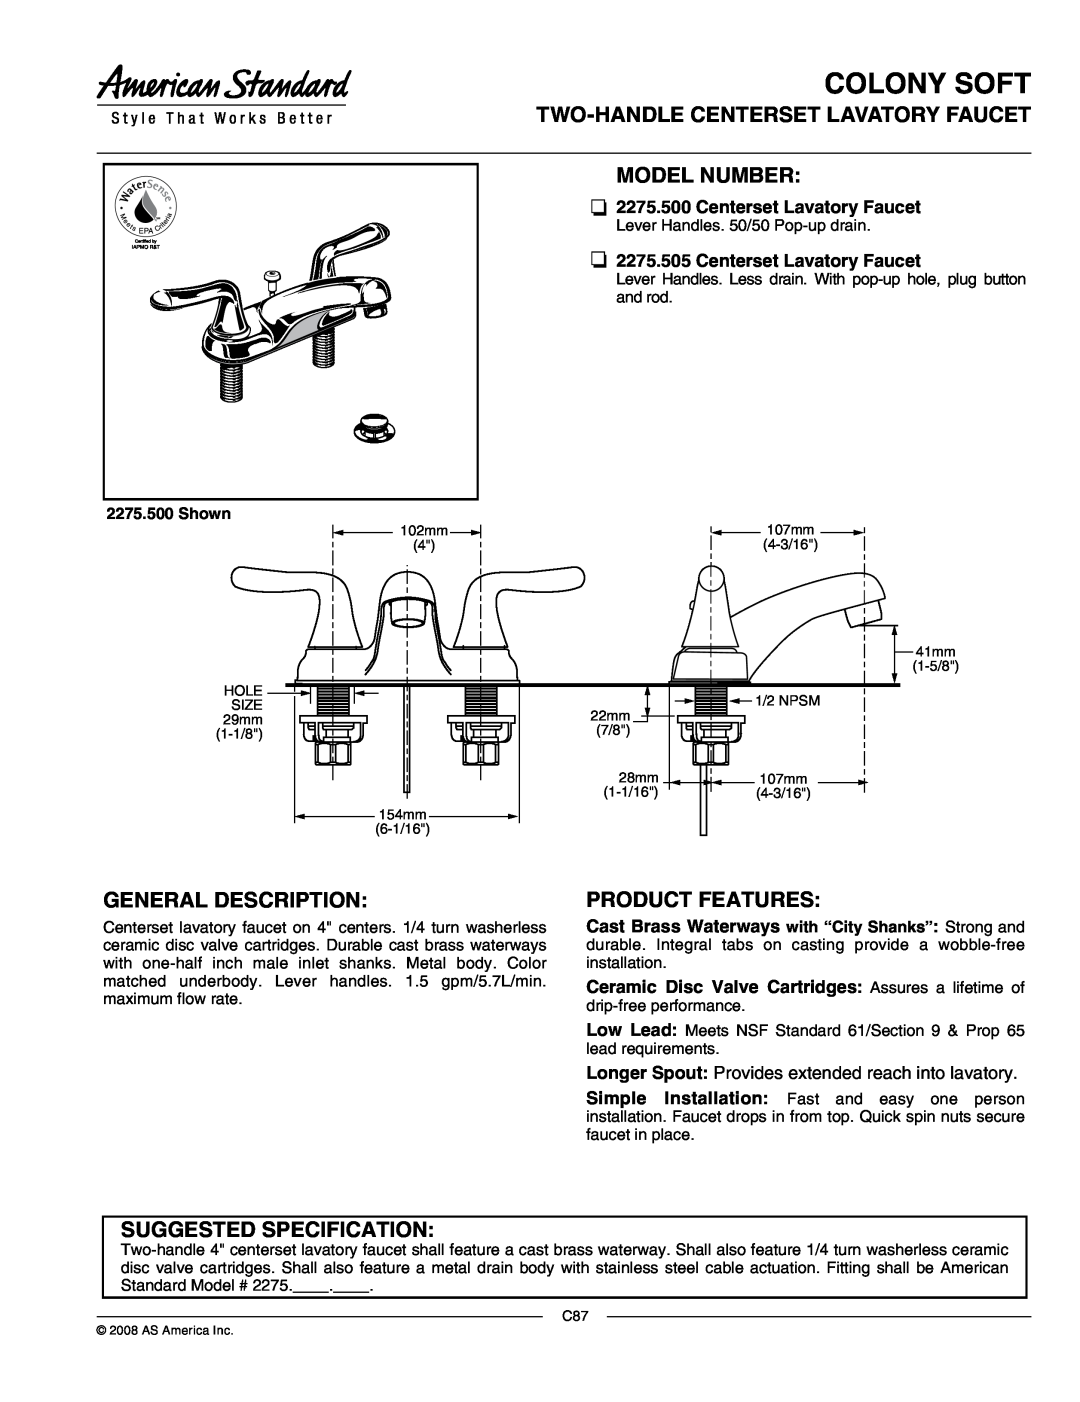 American Standard 2275.503 manual Product Features, Centerset Lavatory Faucet, Colony Soft, General Description, Shown 